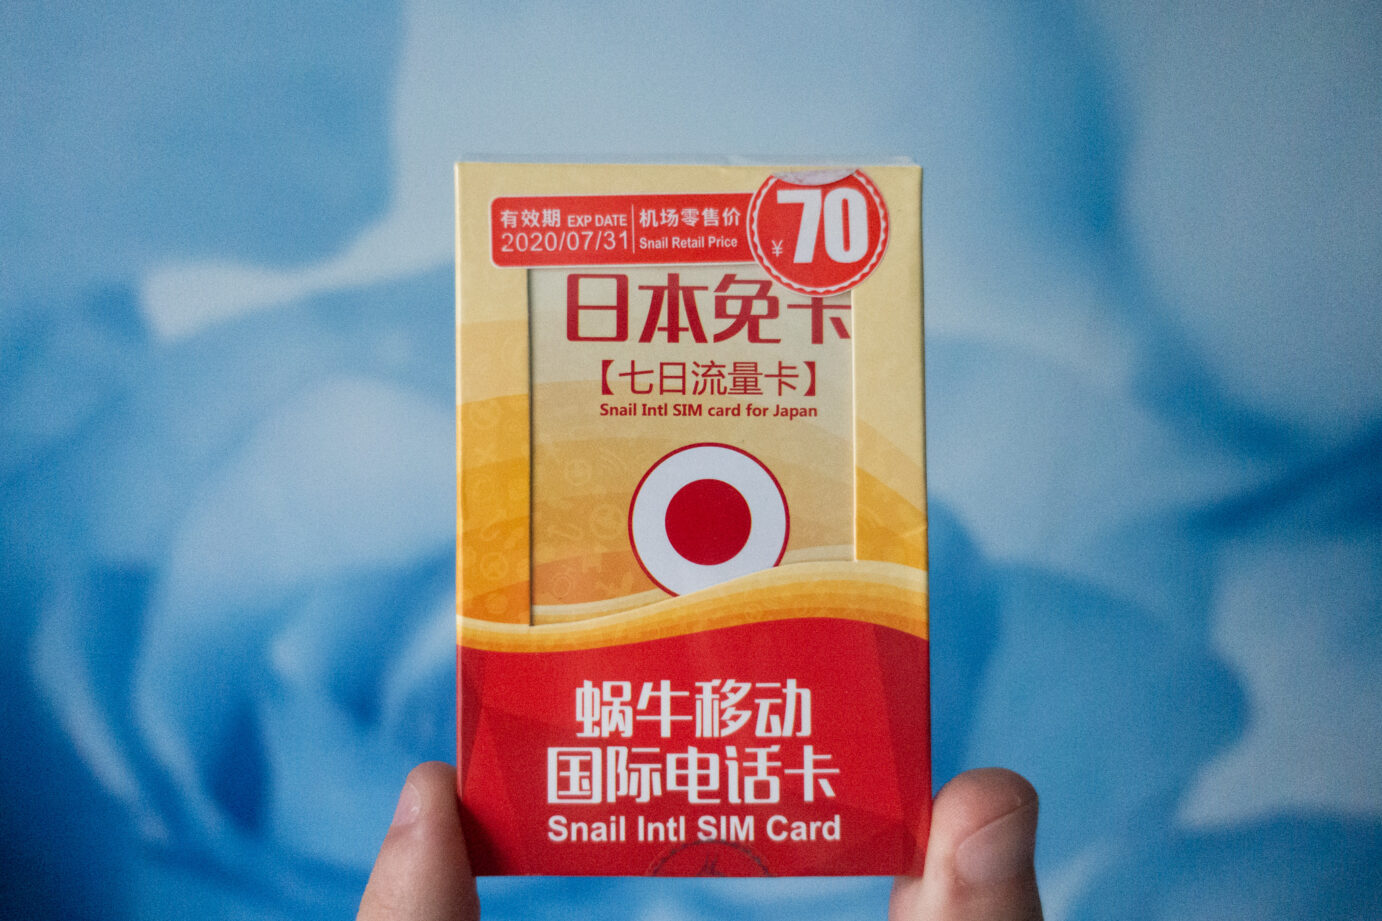 SIM Cards at the Beijing Airport • Vending Machine for Asian Data SIM